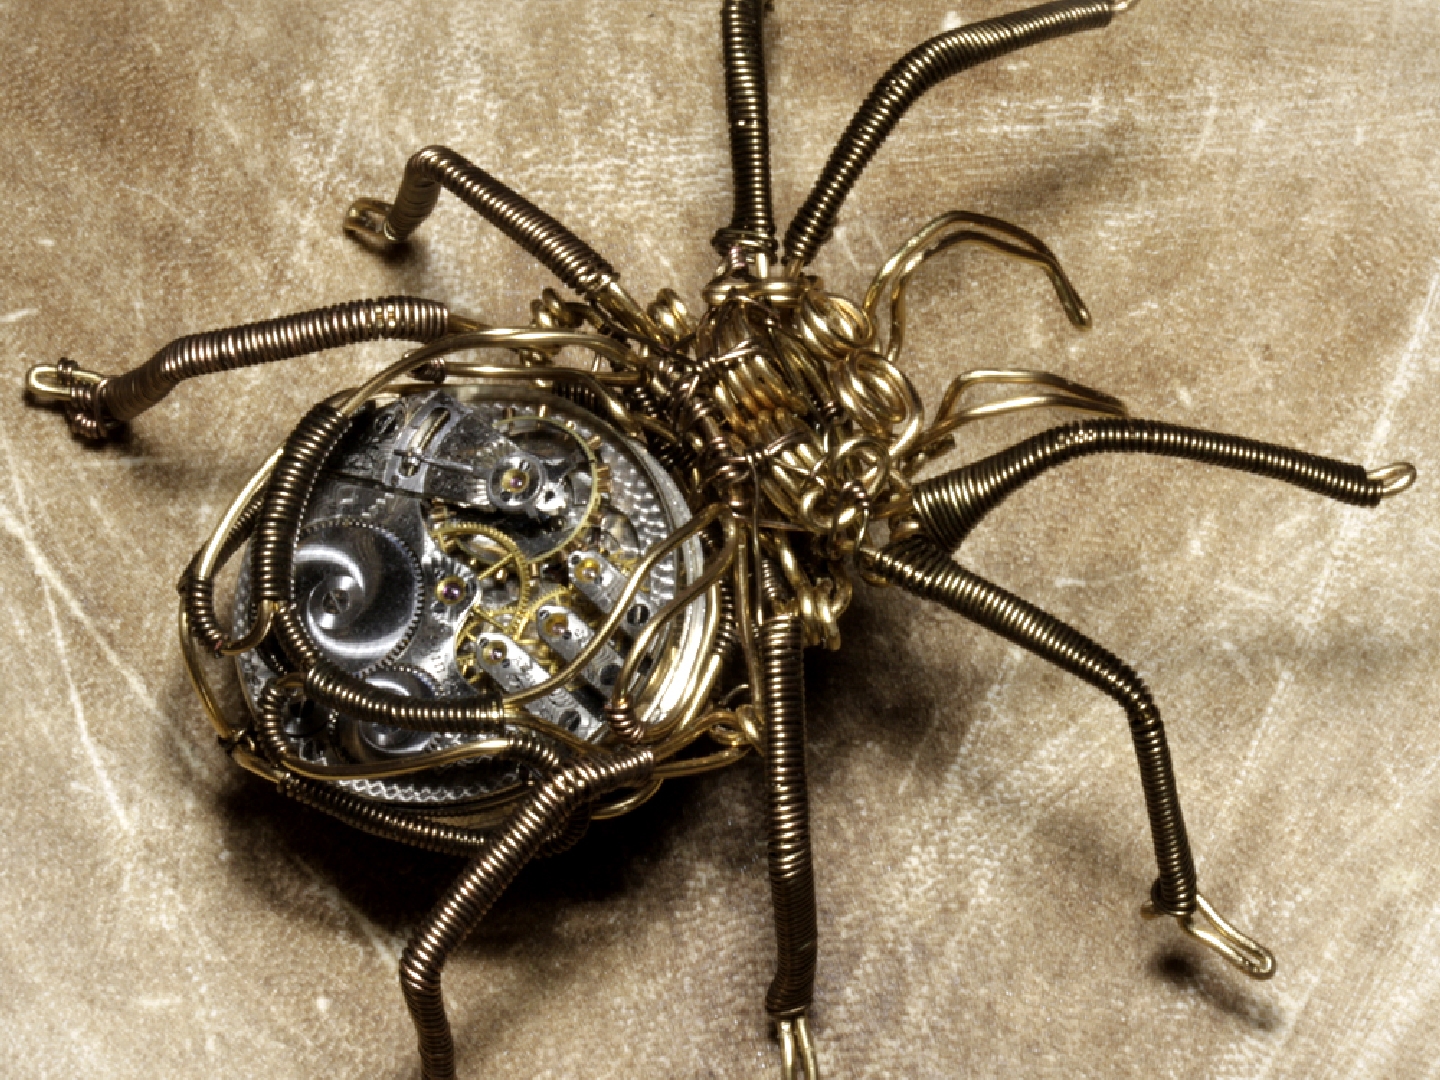 Steampunk Clockwork Spider, Brass and Copper Wire Sculpture by Daniel Proulx